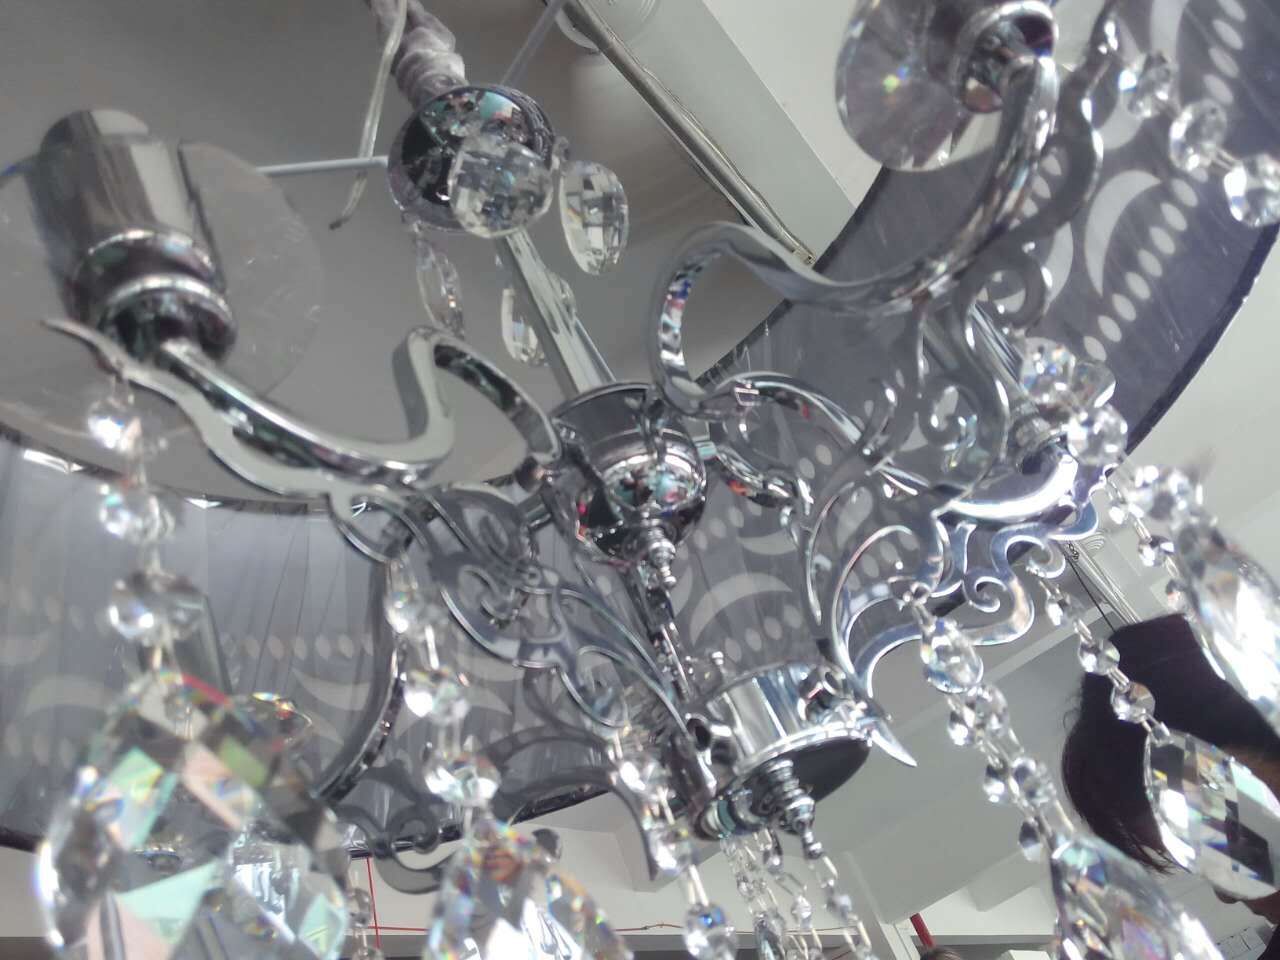 Graceful style modern hotel lobby crystal pendant lights(CL 5281/5 CR+WT )